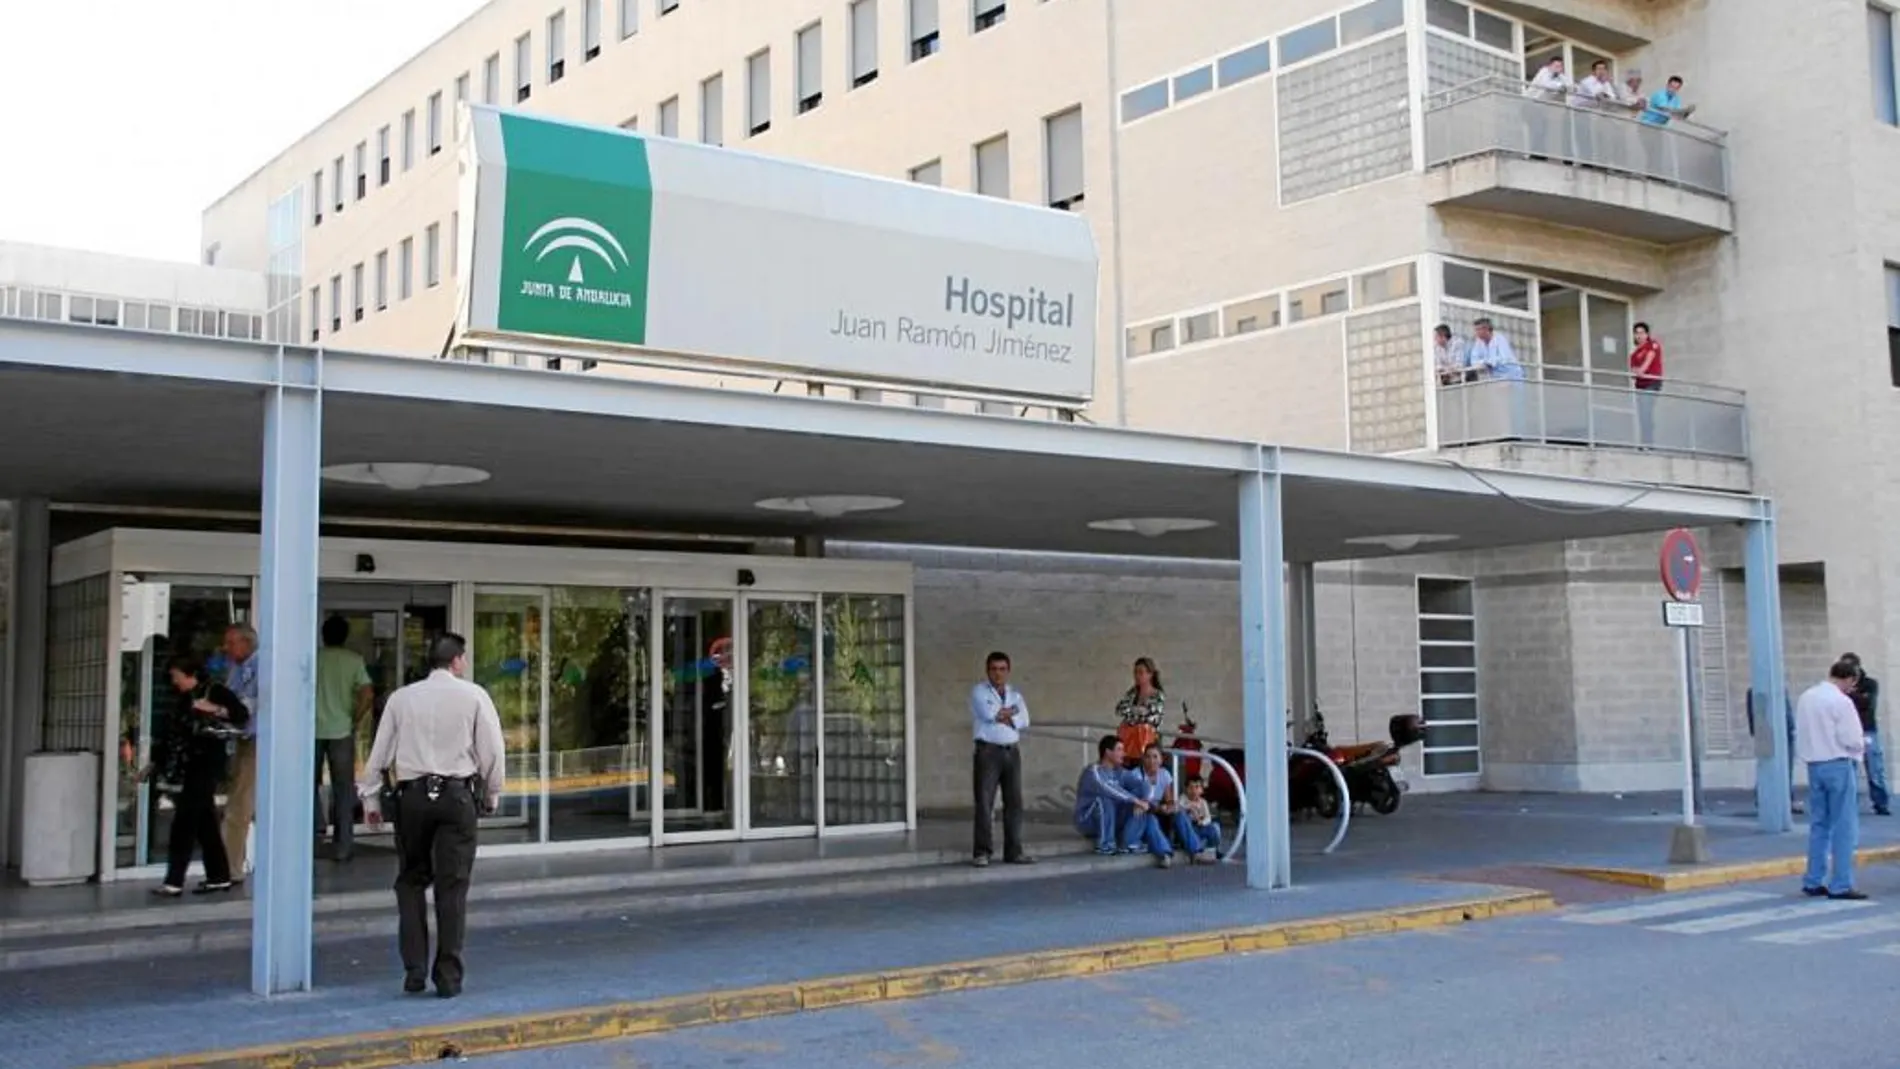 El bebé fue trasladado al hospital Juan Ramón Jiménez de Huelva